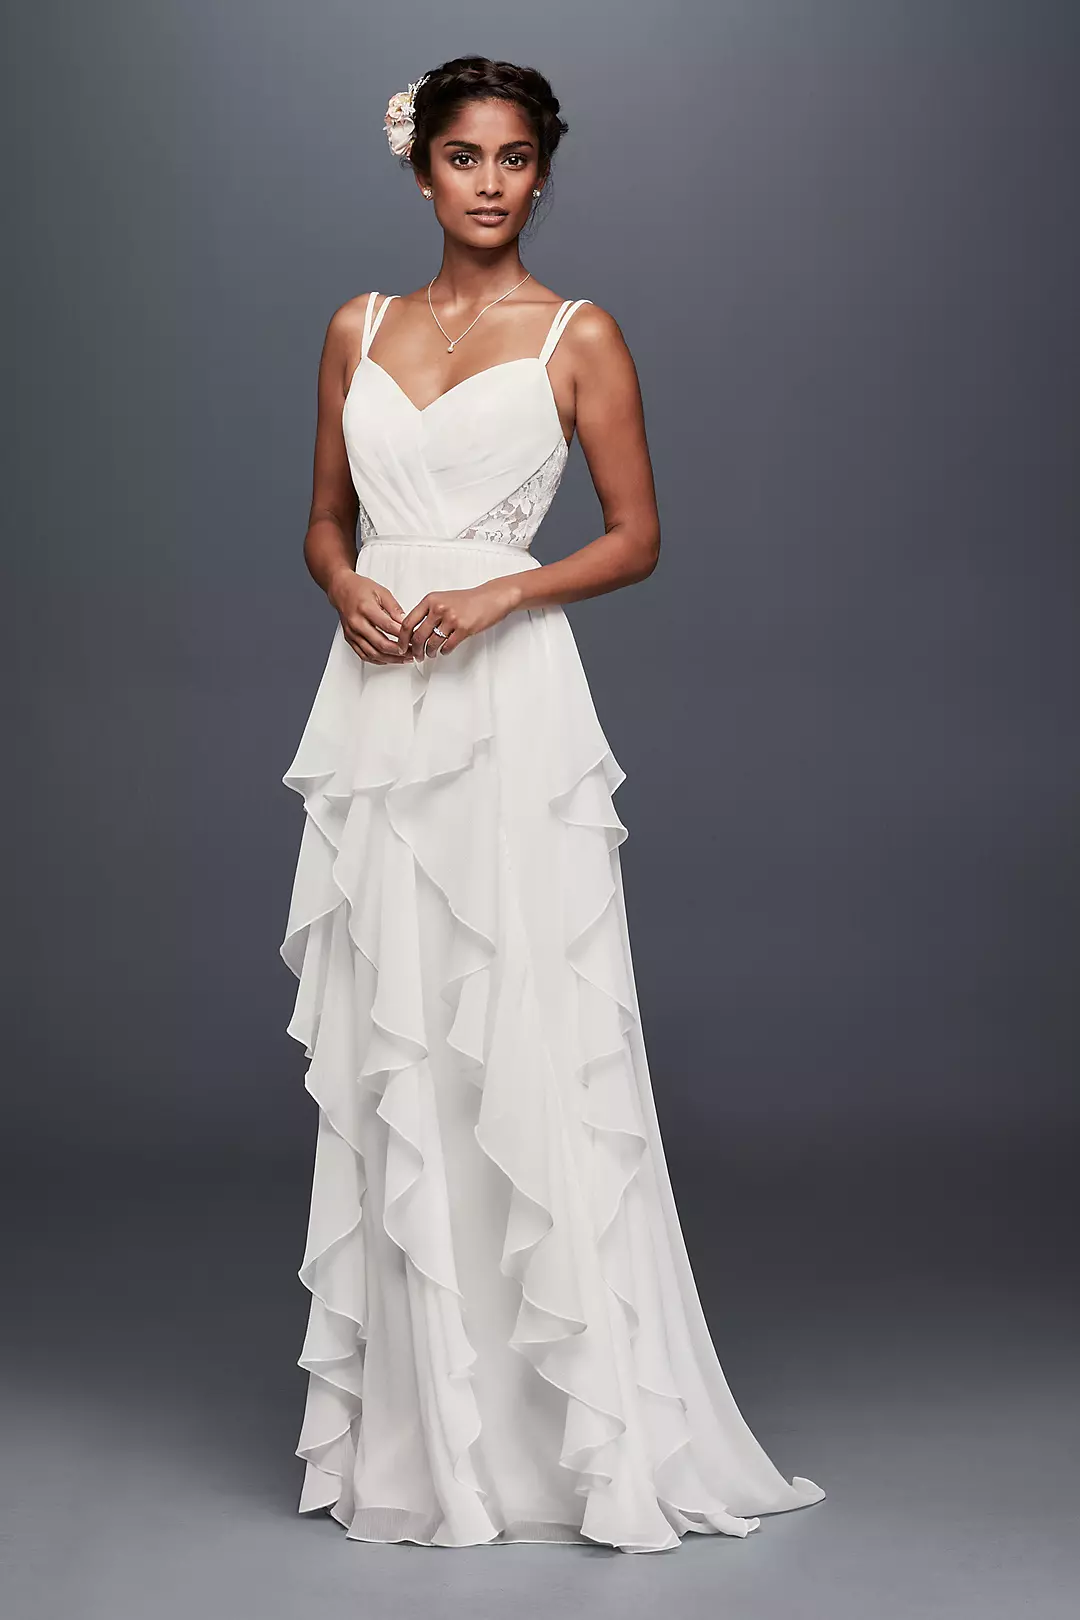 Ruffled Chiffon Wedding Dress with Lace Back   Image